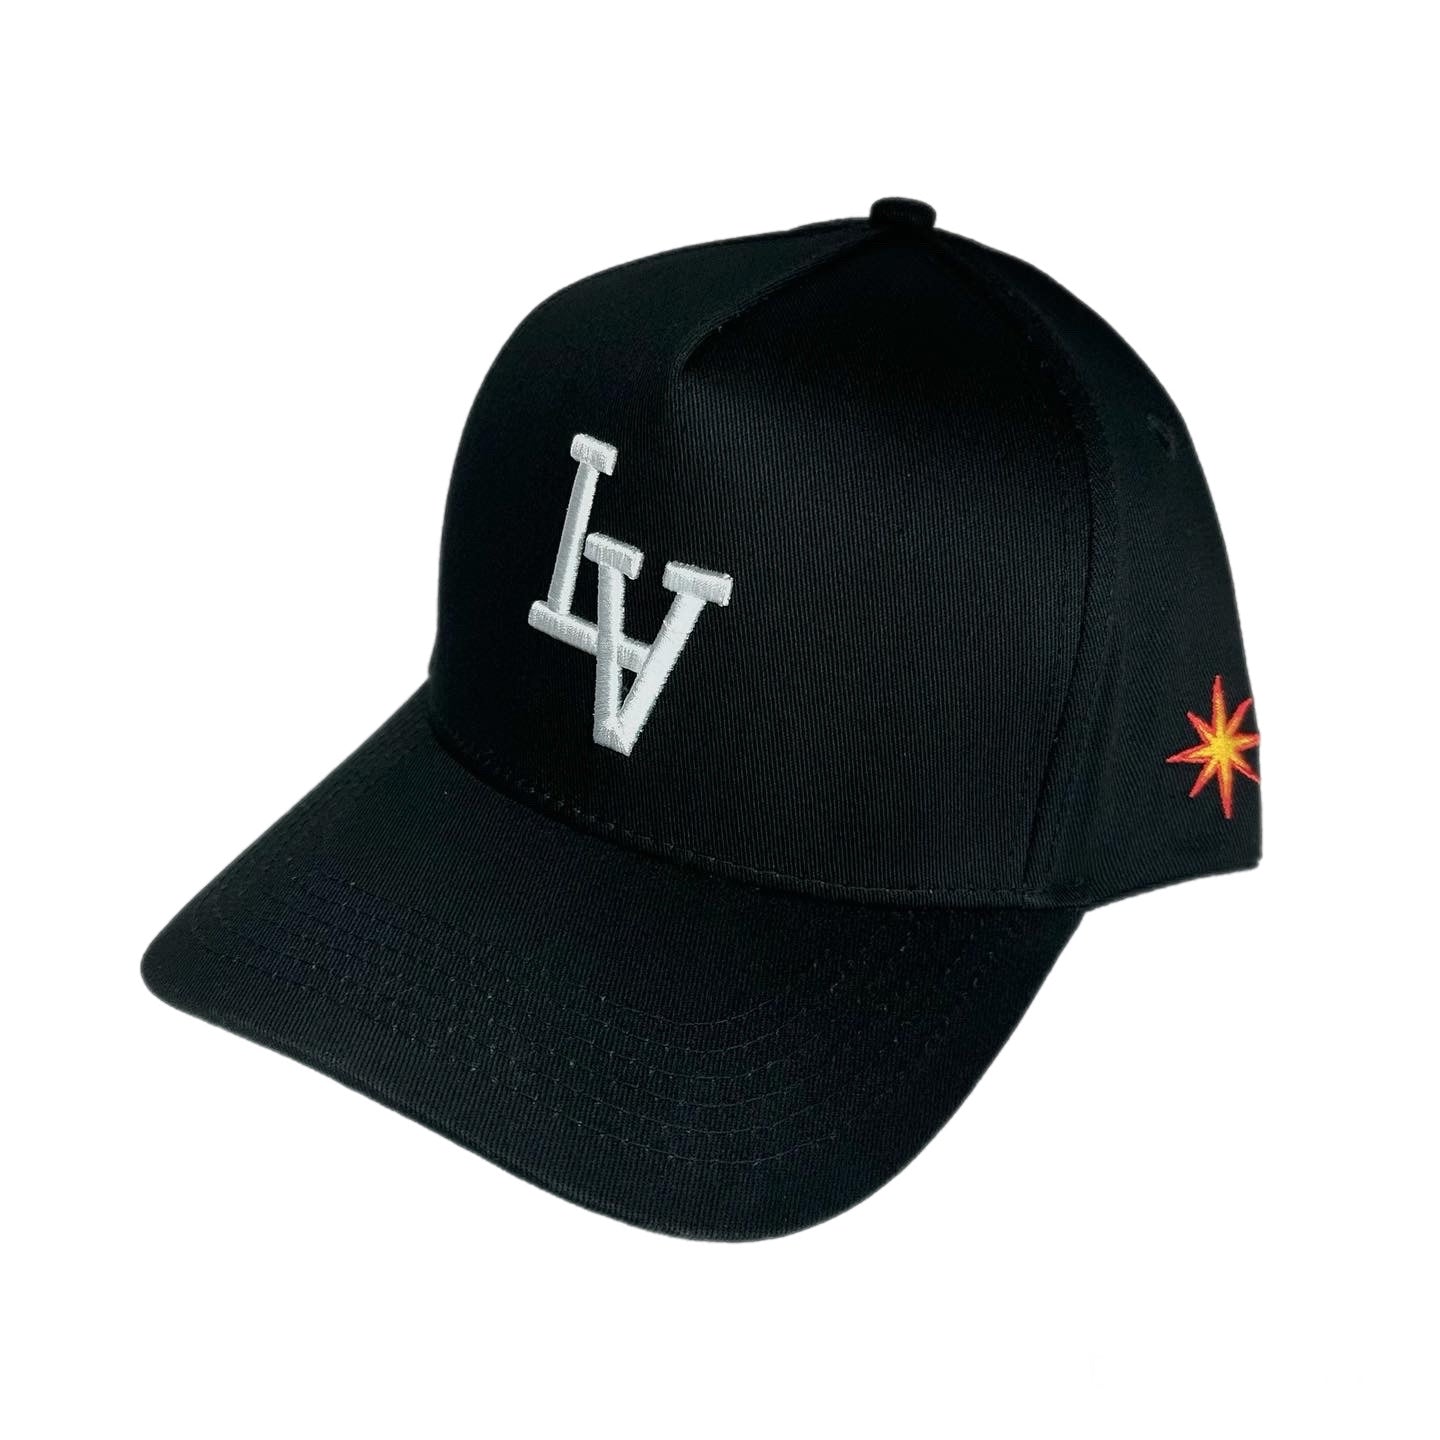 Las Vegas Stars Snapback Hat - Black/White – NSPR.LV